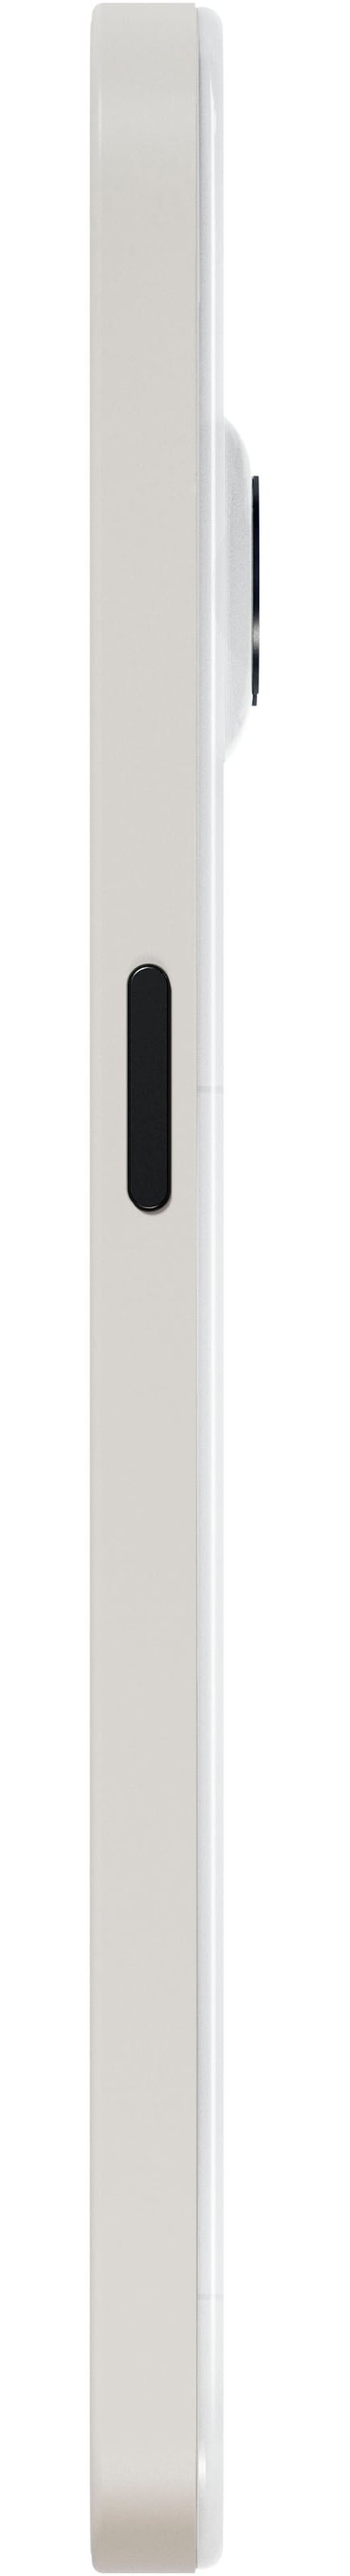 NOTHING Smartphone »Phone 2a«, milk, 17 cm/6,7 Zoll, 128 GB Speicherplatz, 50 MP Kamera